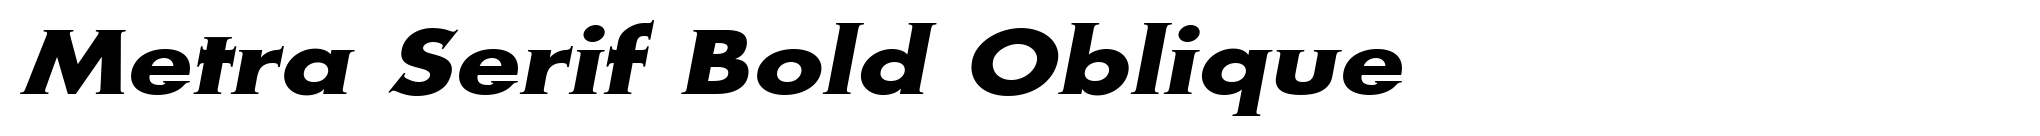 Metra Serif Bold Oblique image